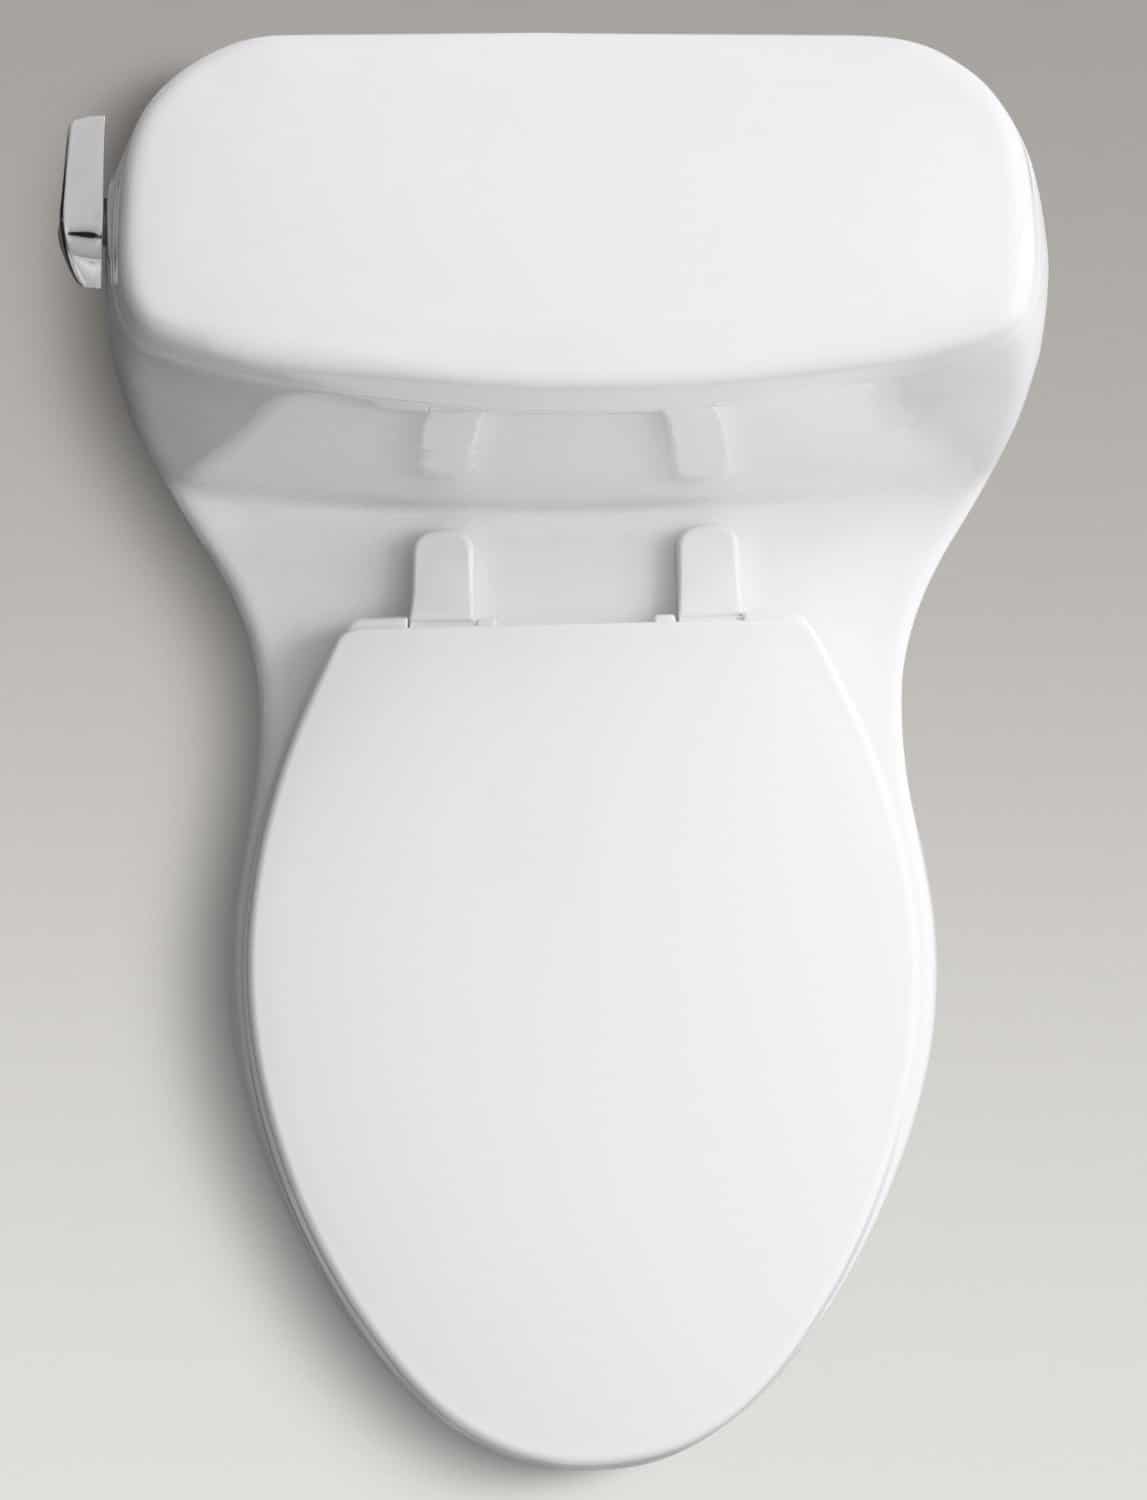 kohler-3810-0-santa-rosa-toilet-review-shop-toilet